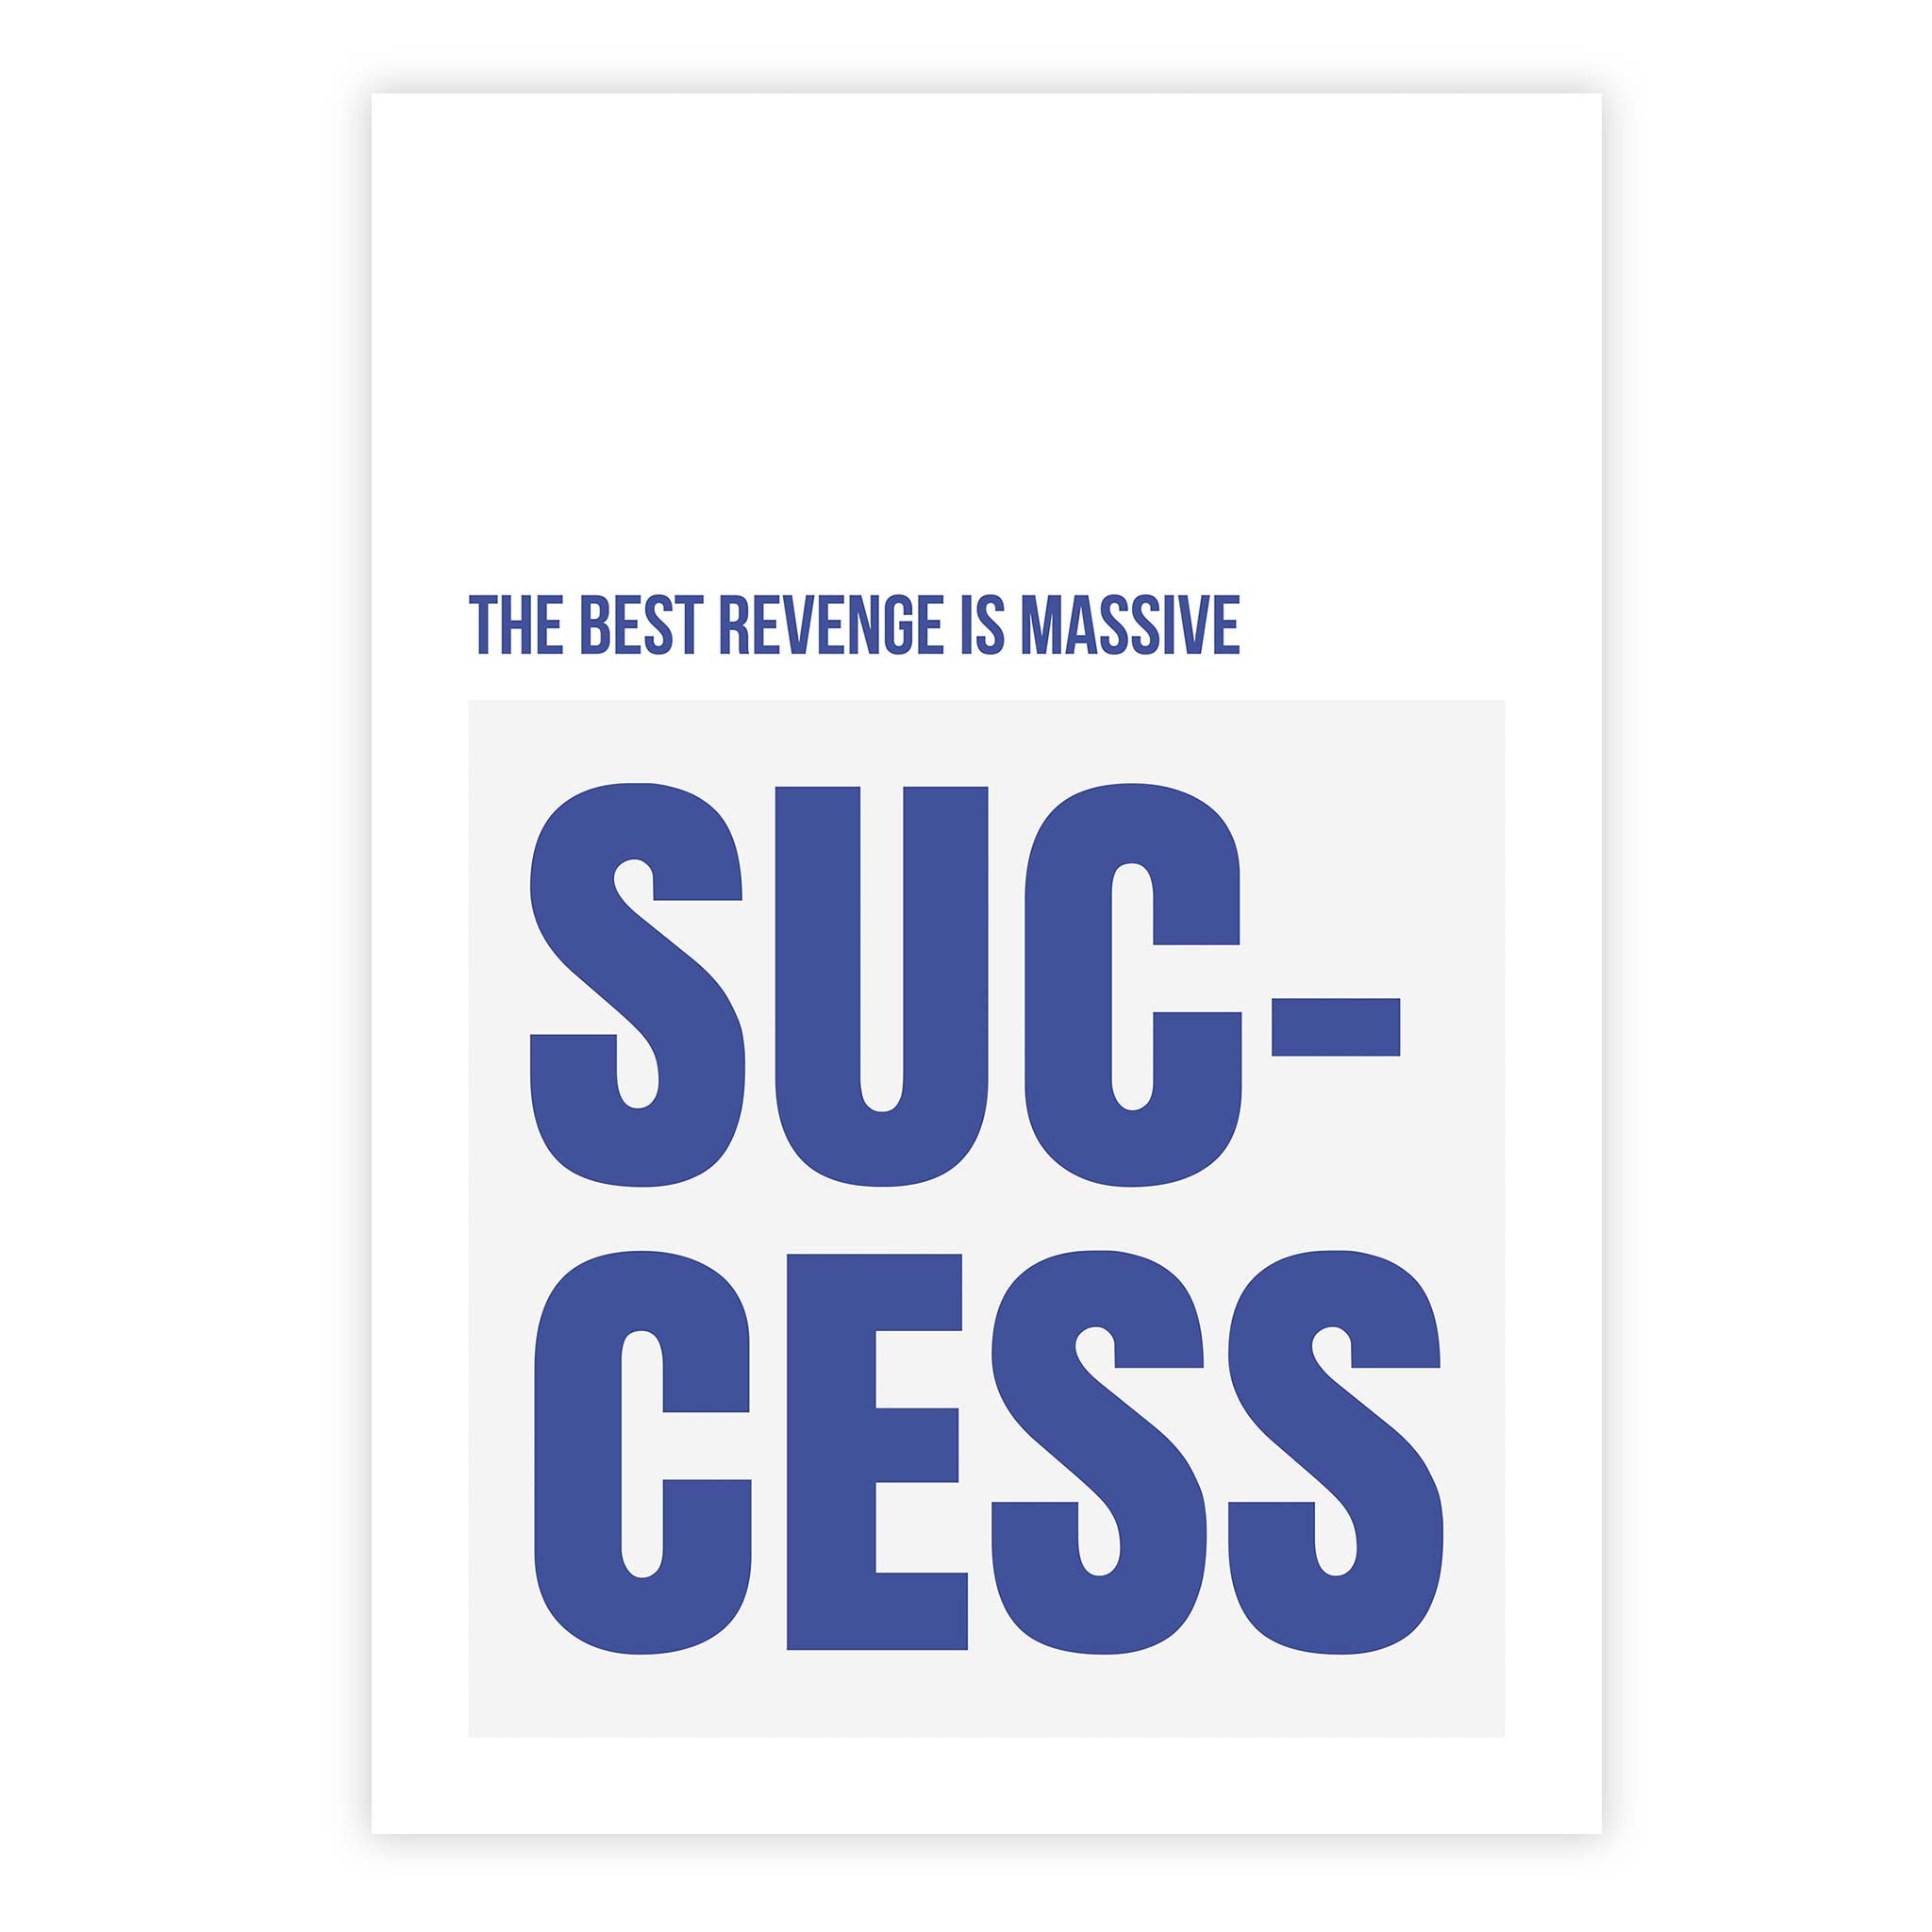 The best revenge is massive success